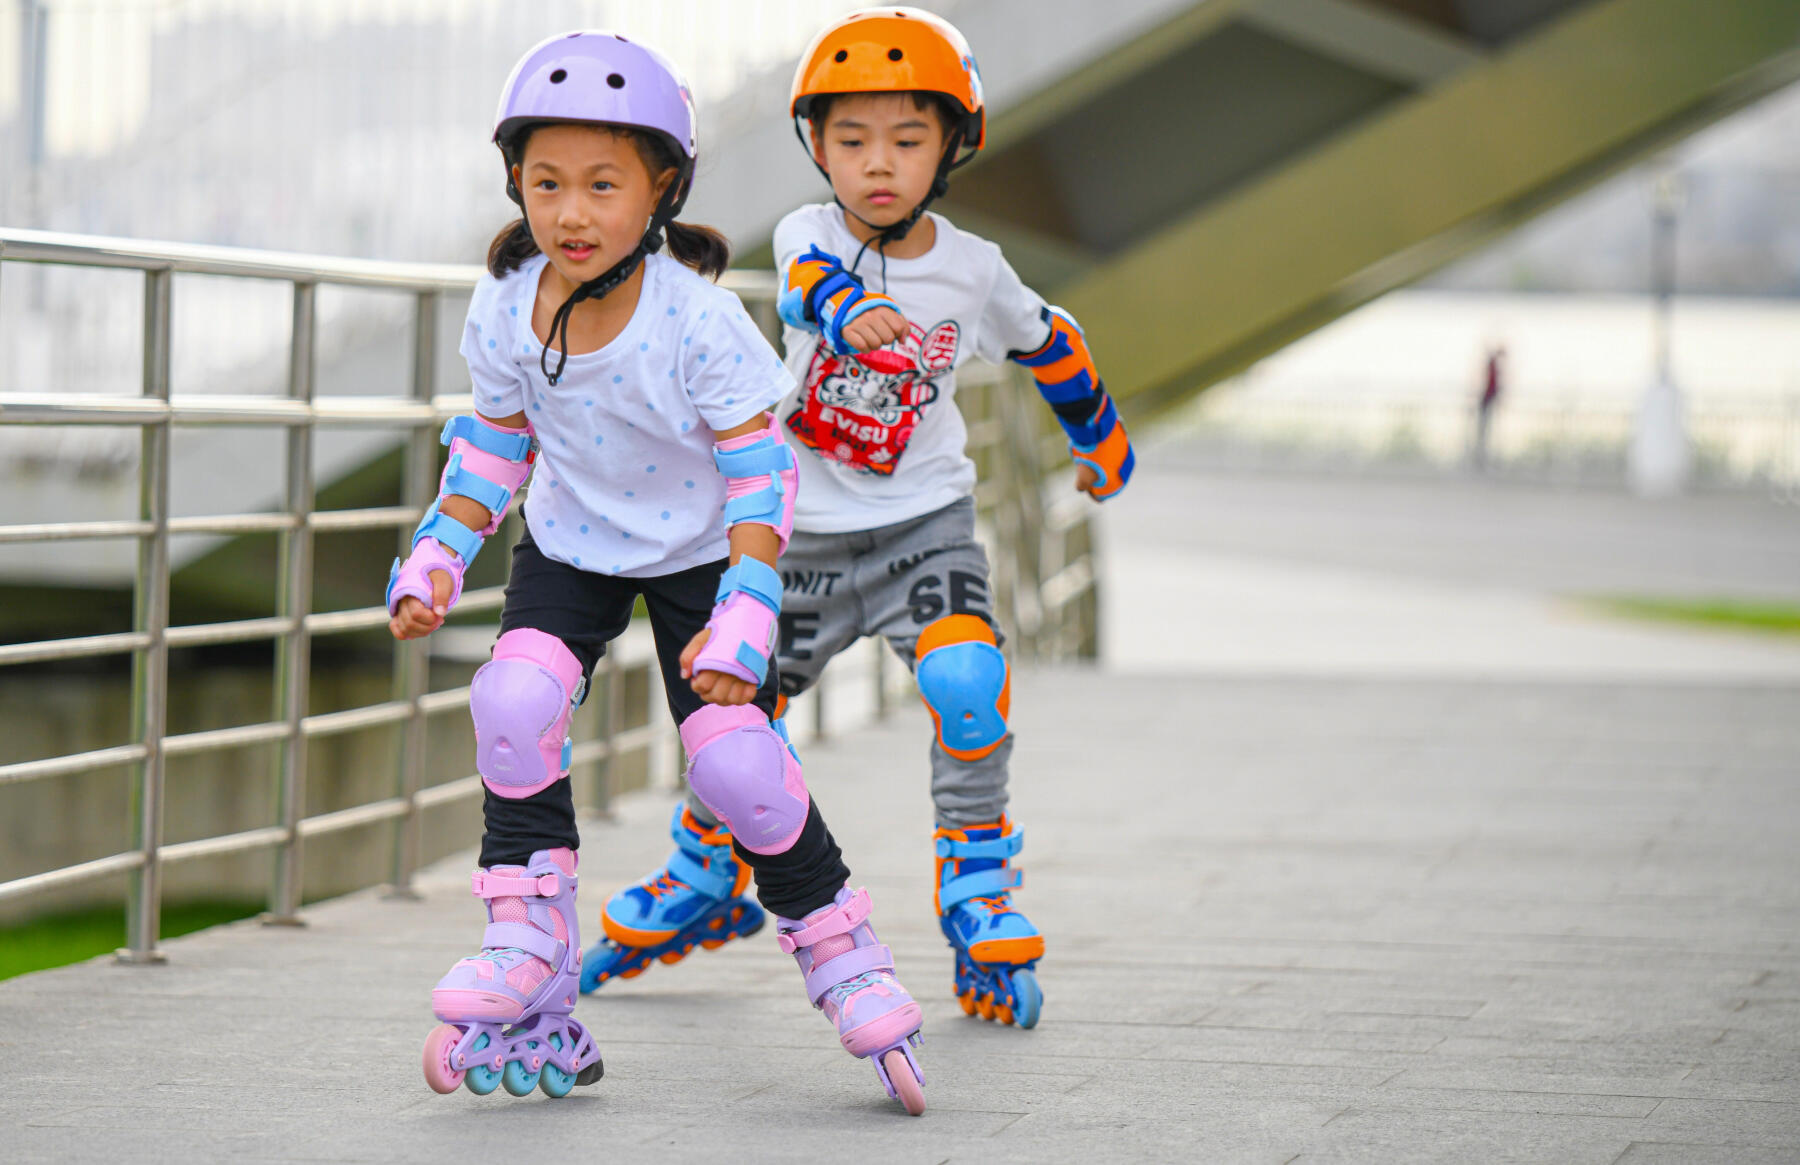 2. Roller學堂 ：運動要識得揀！滾軸溜冰是孩子的理想成長運動？